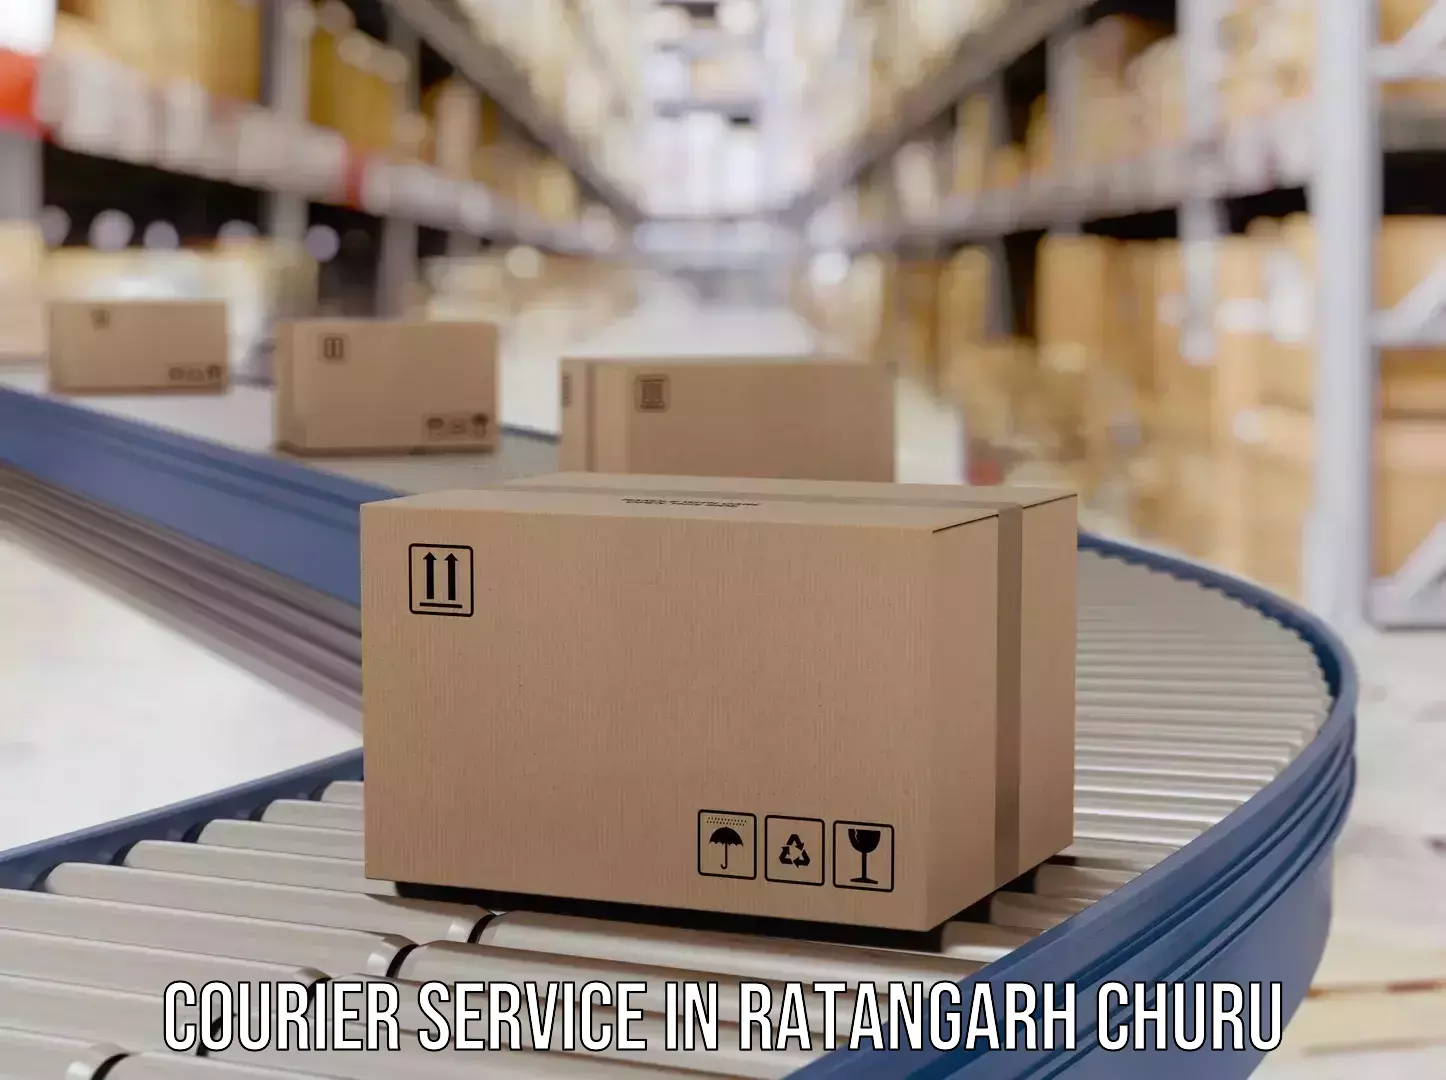 High-priority parcel service in Ratangarh Churu